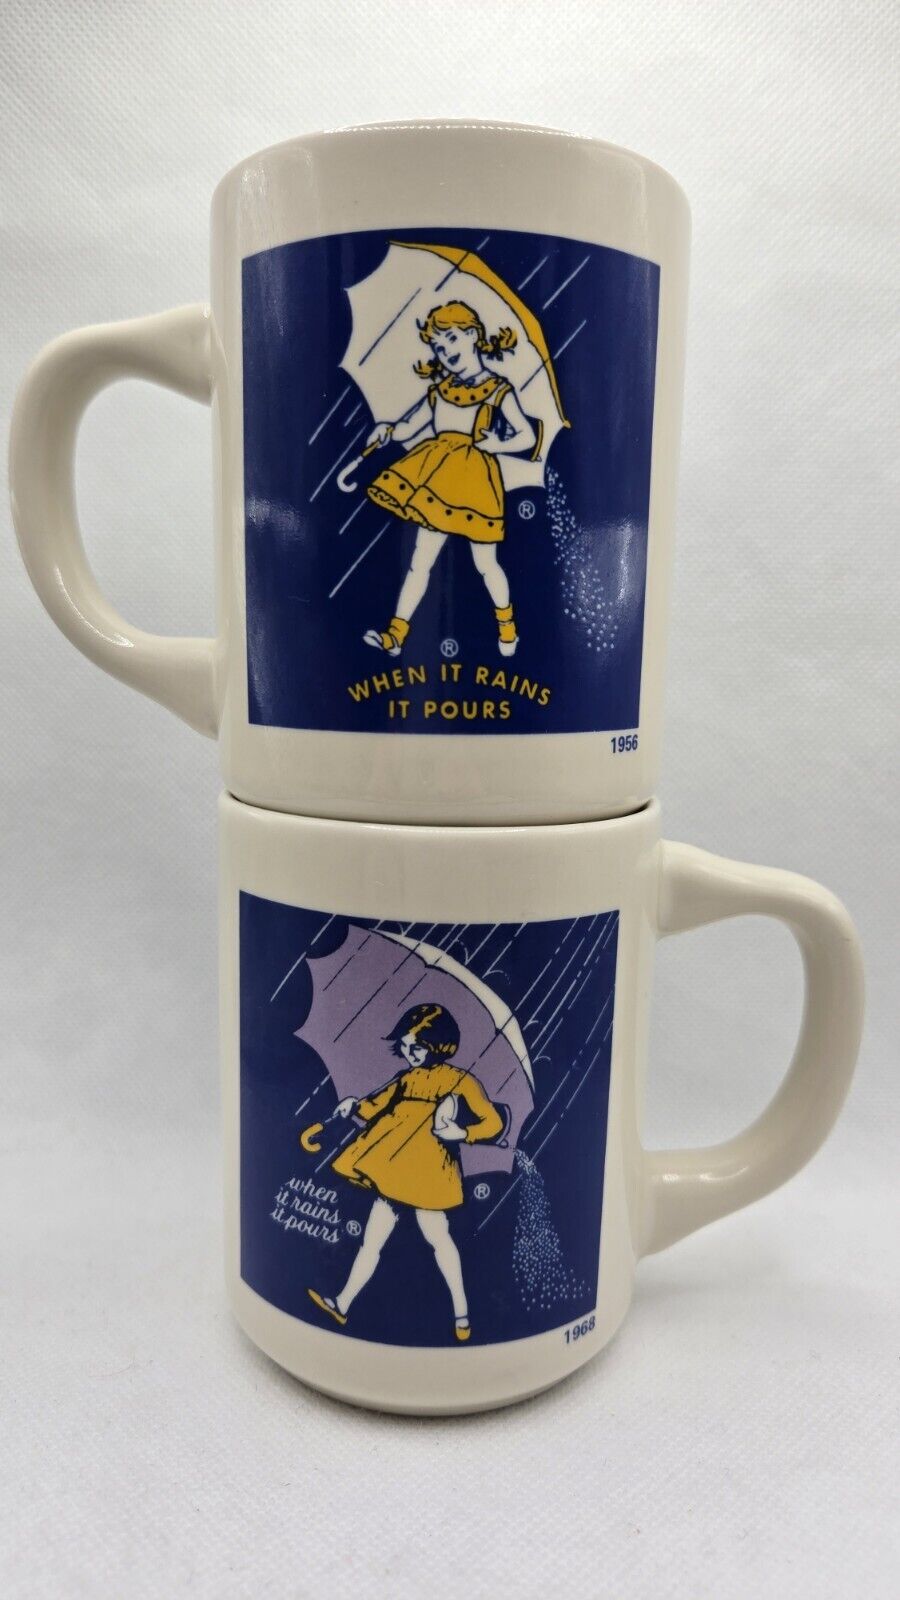 Lot of 2 Vintage Morton Salt 1956 1968 Girl When It Rains Pours Coffee Mug Cup